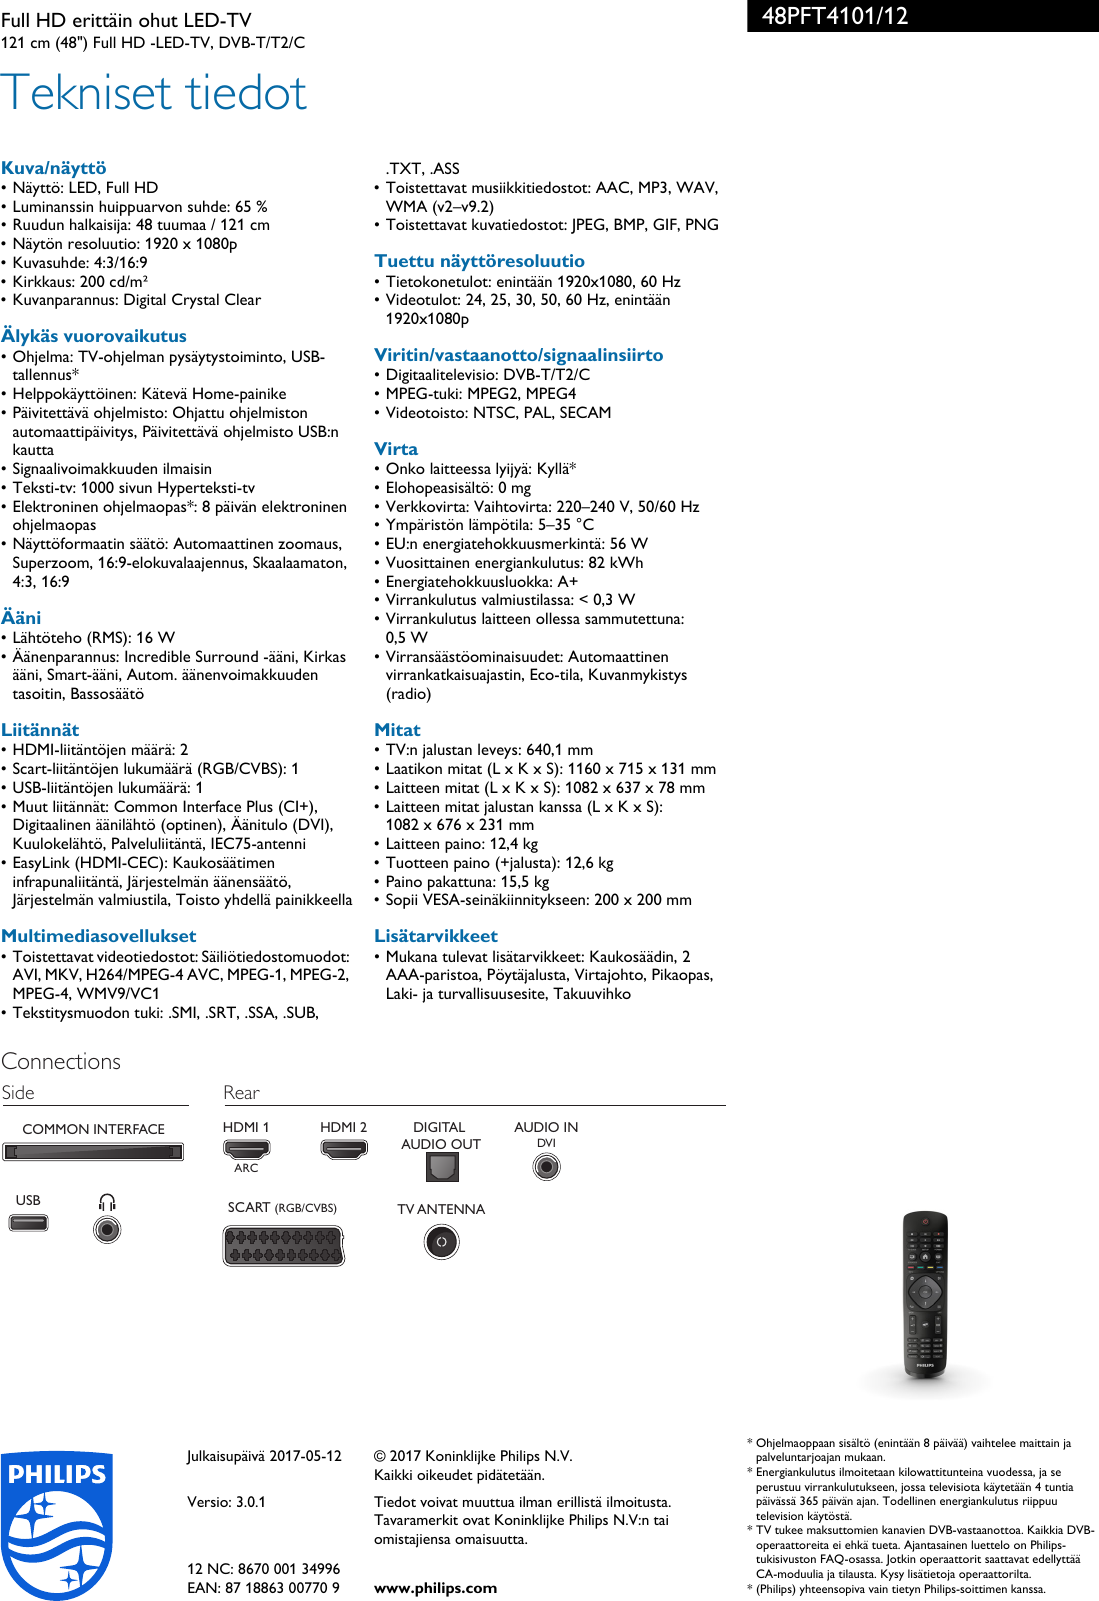 Page 3 of 3 - Philips 48PFT4101/12 Erittäin Ohut Full HD LED-TV Ja Digital Crystal Clear -tekniikka User Manual Esite 48pft4101 12 Pss Finfi